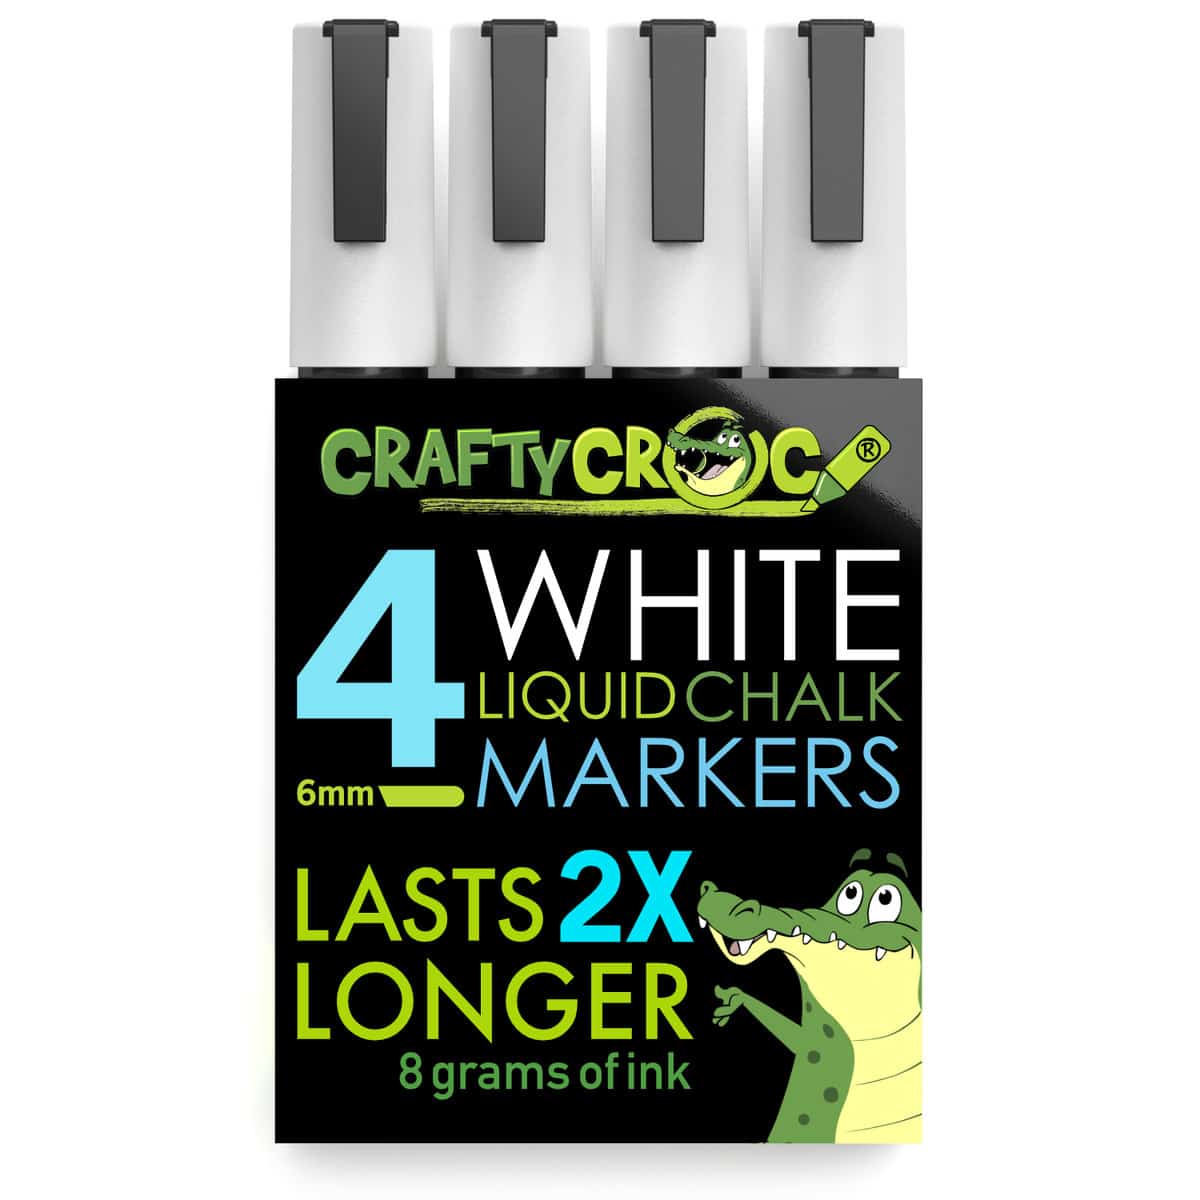 Crafty Croc 4 White Liquid Chalk Markers, 6mm Reversible Tip